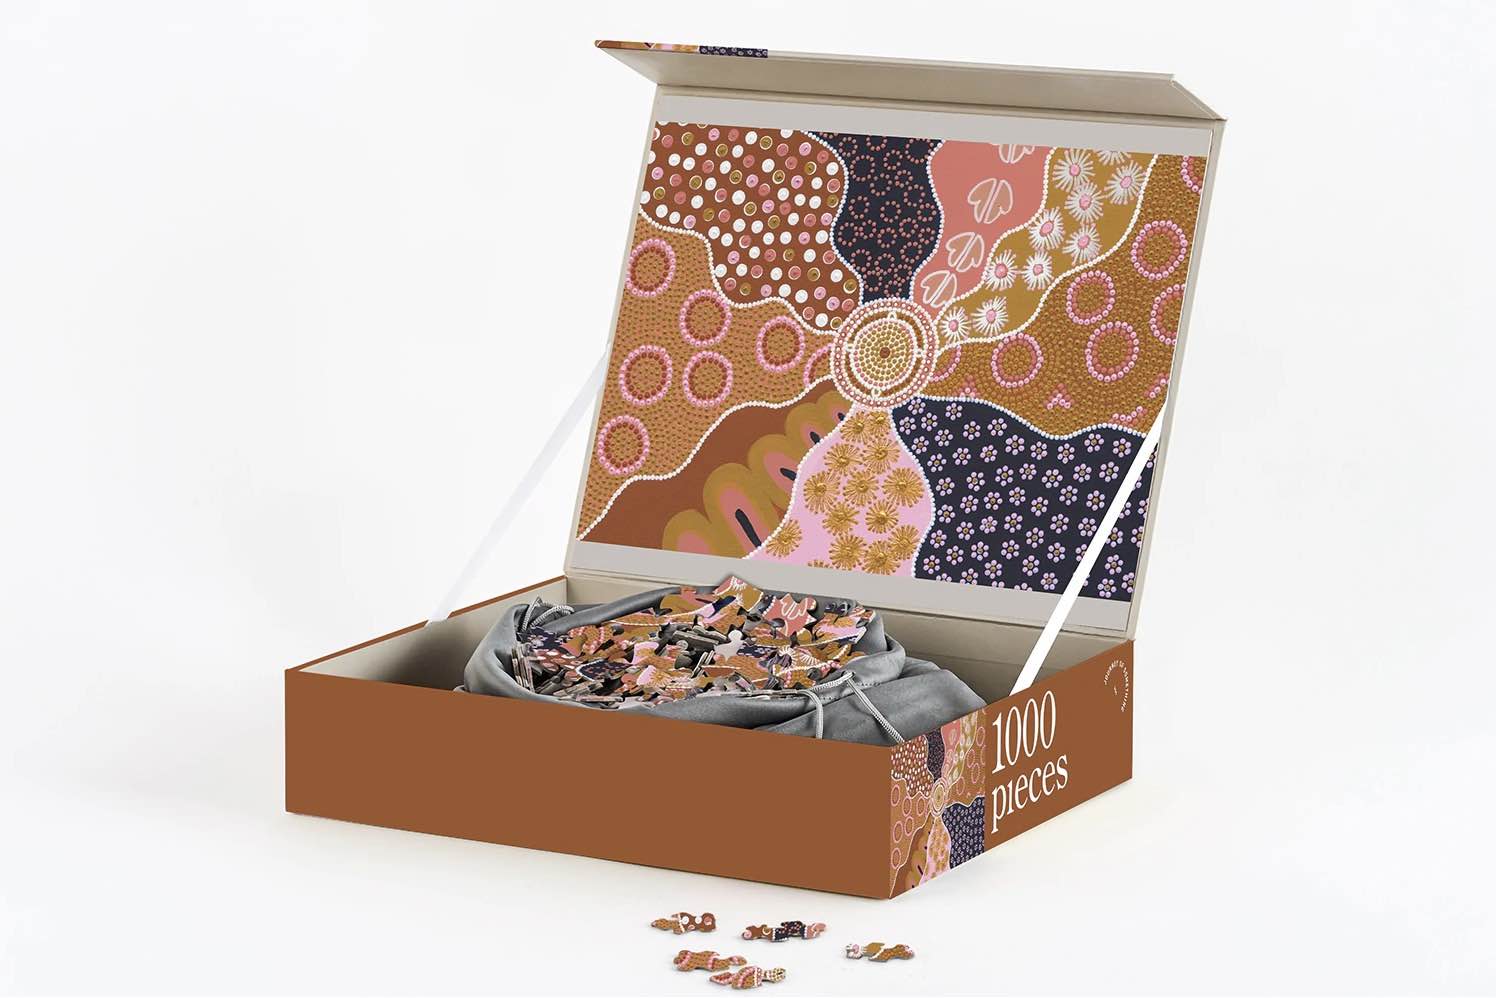 Desert Flower Puzzle featuring an Indigenous artwork in brown, orange, earthy tones